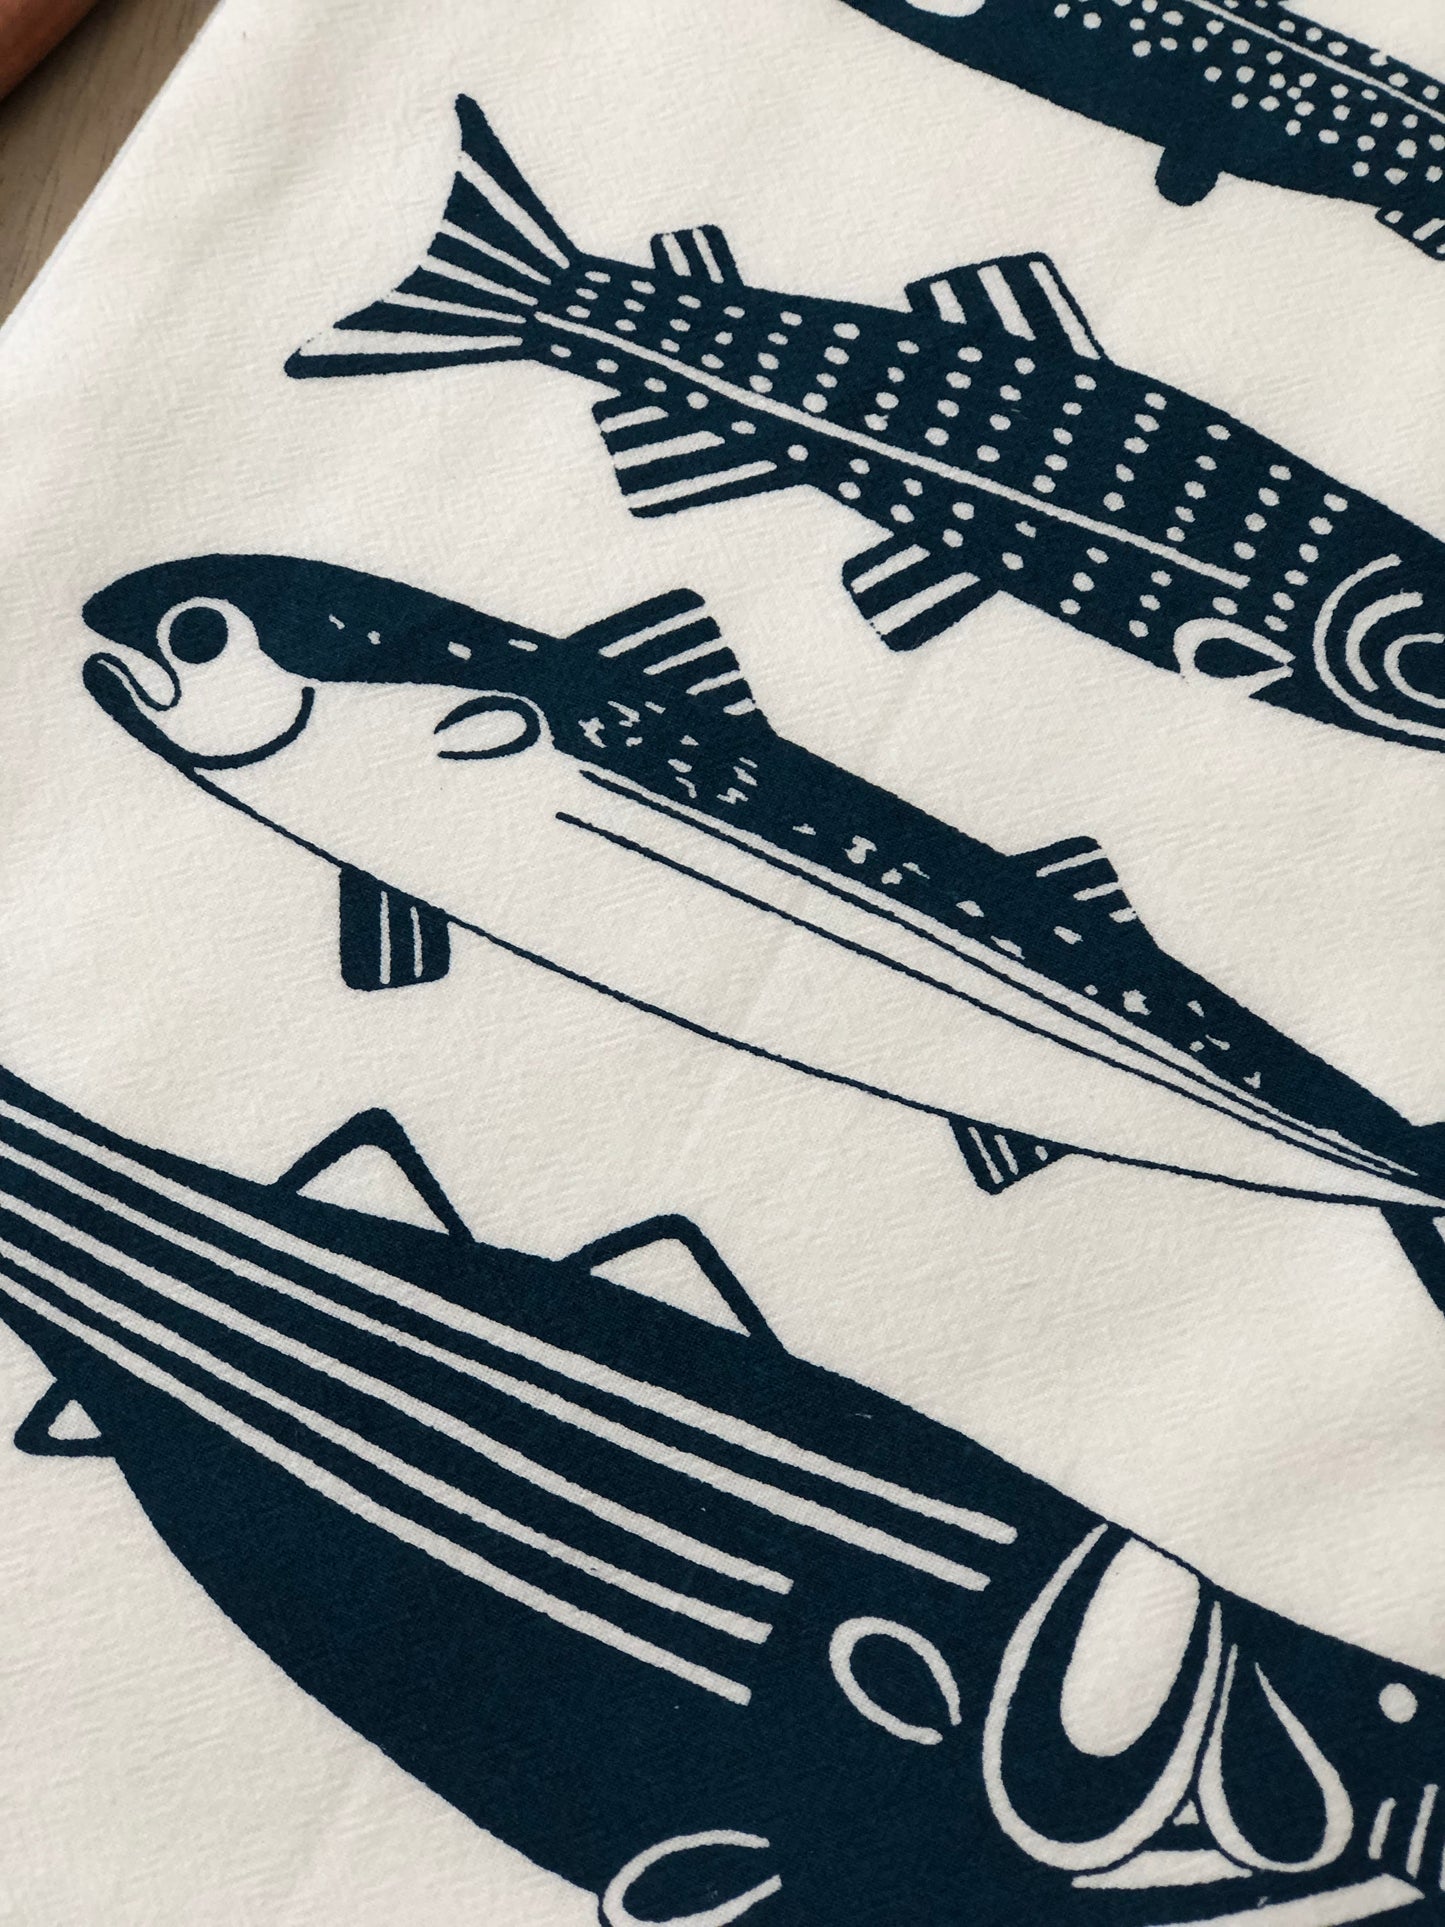 Maine Fish dinner napkin set